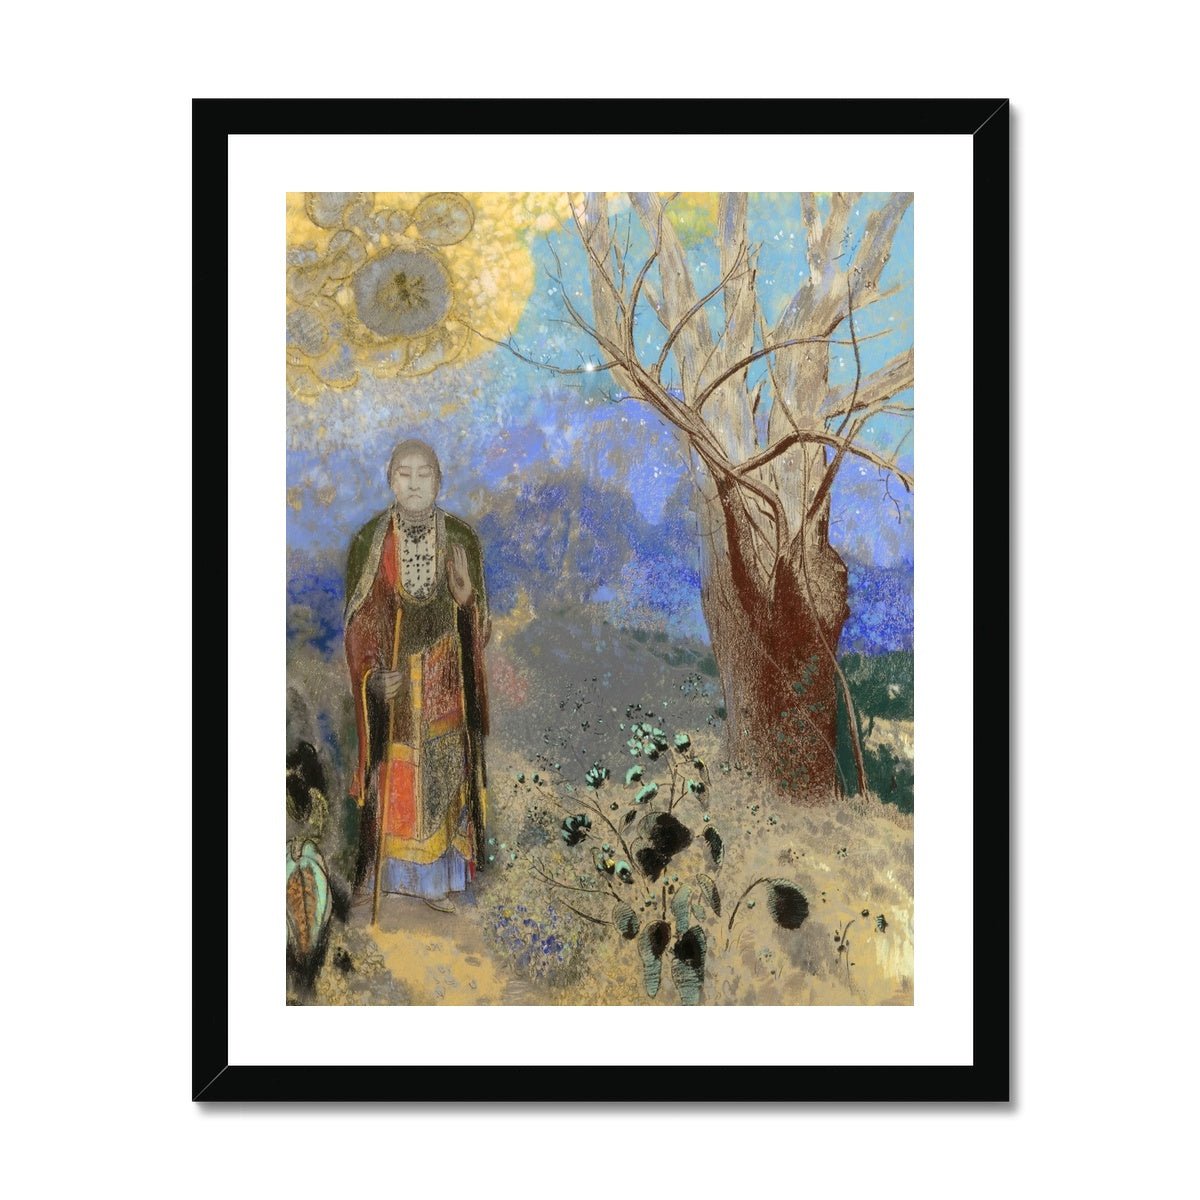 Framed Print The Buddha, by Odilon Redon, Symbolism Surrealist Gift Antique Buddhist Sacred Framed Art Print ...